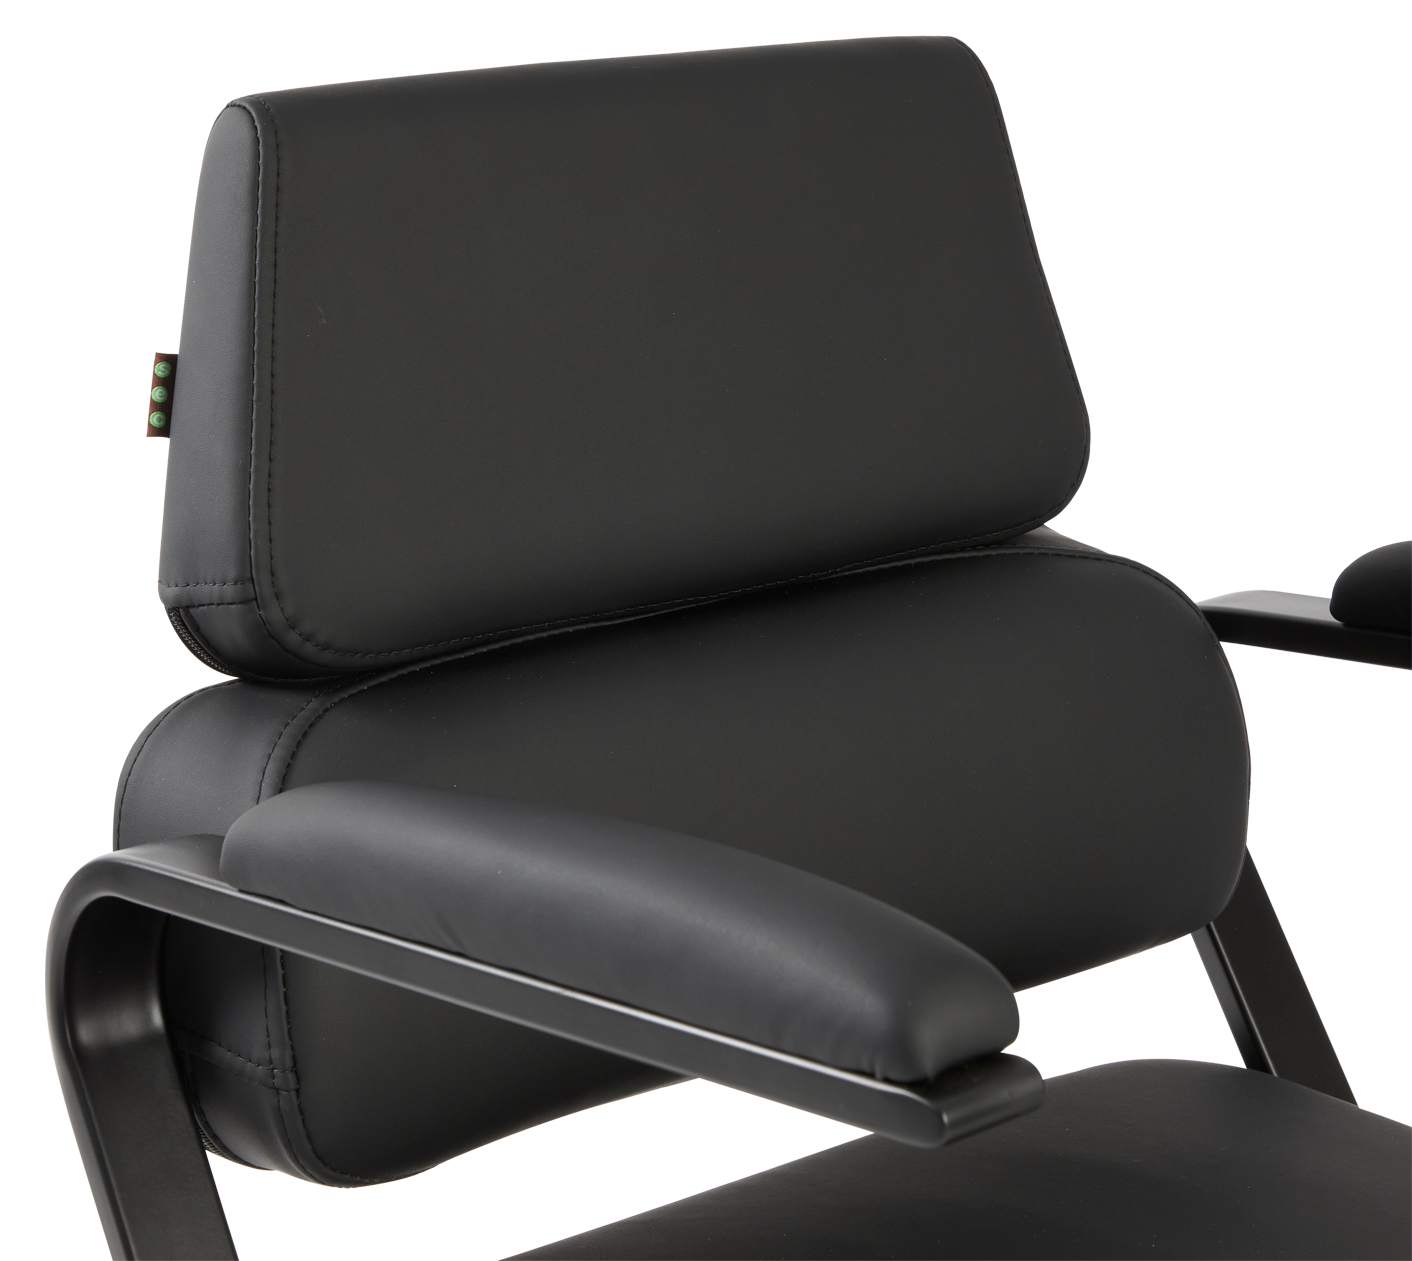 The Iris Salon Styling Chair - Matte Black by SEC